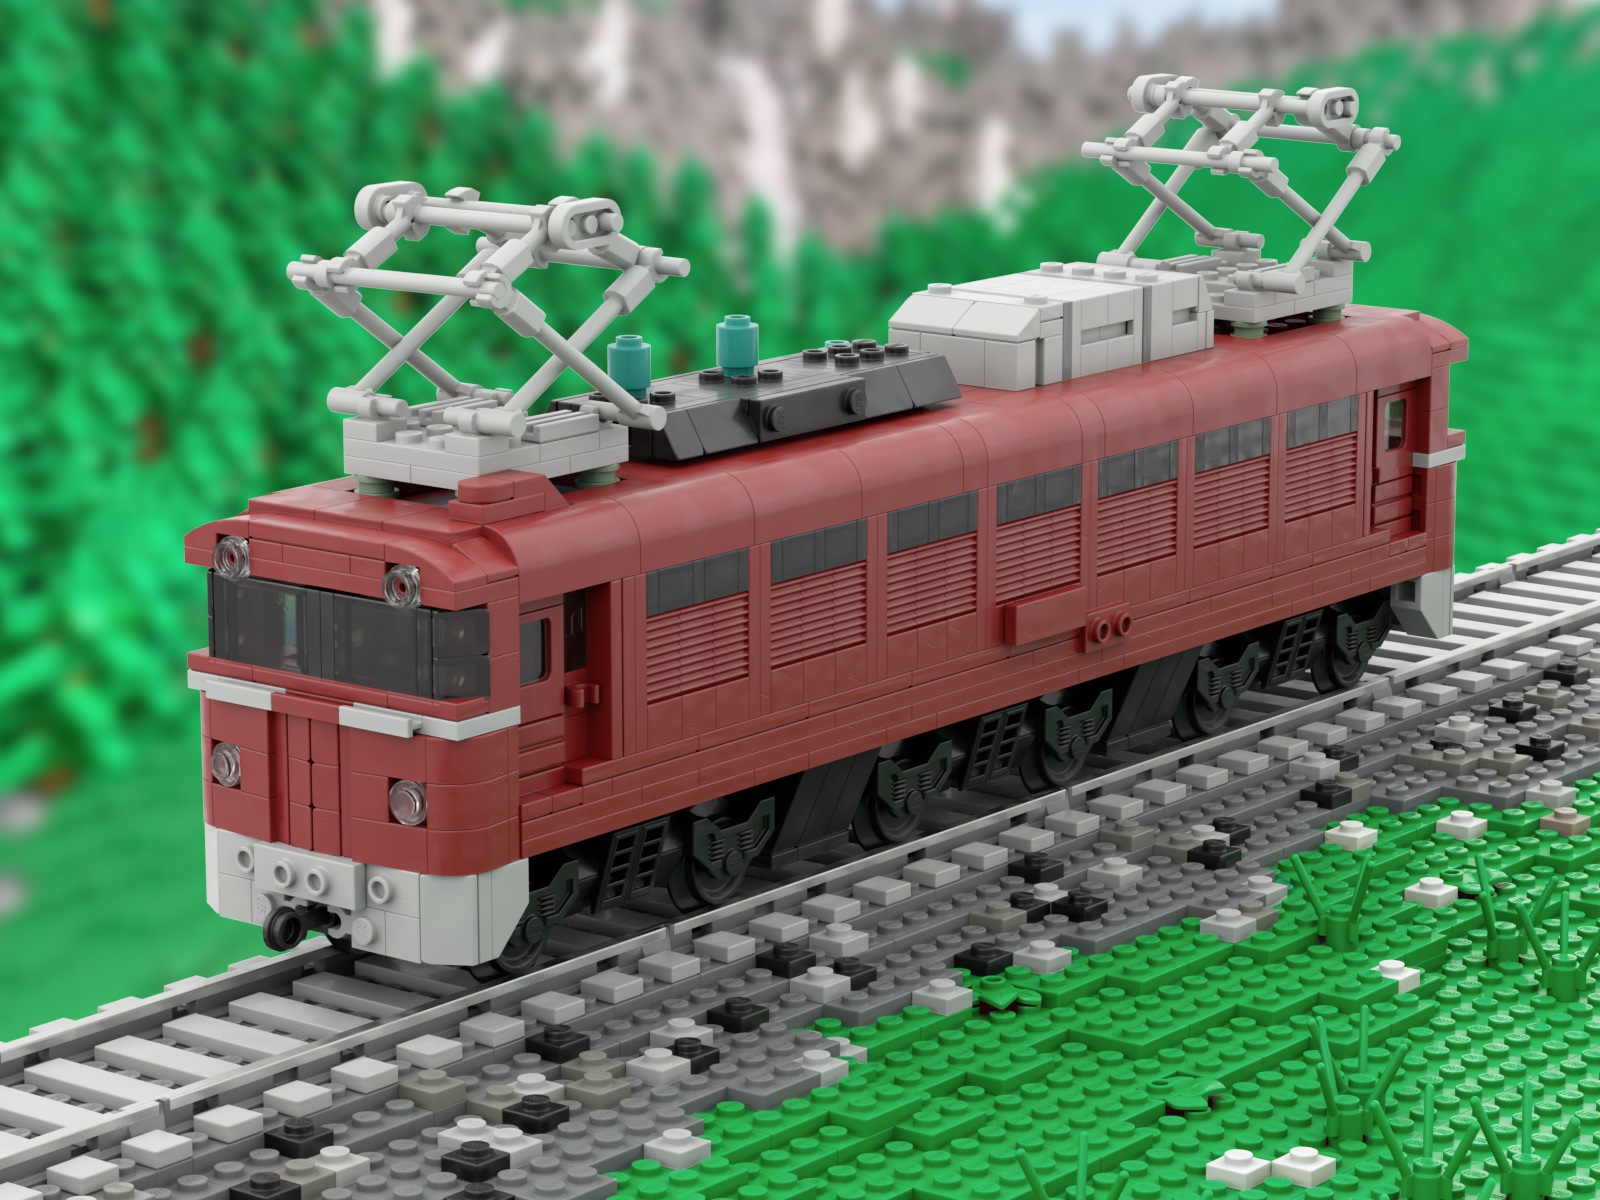 Lego Model of a locomotive